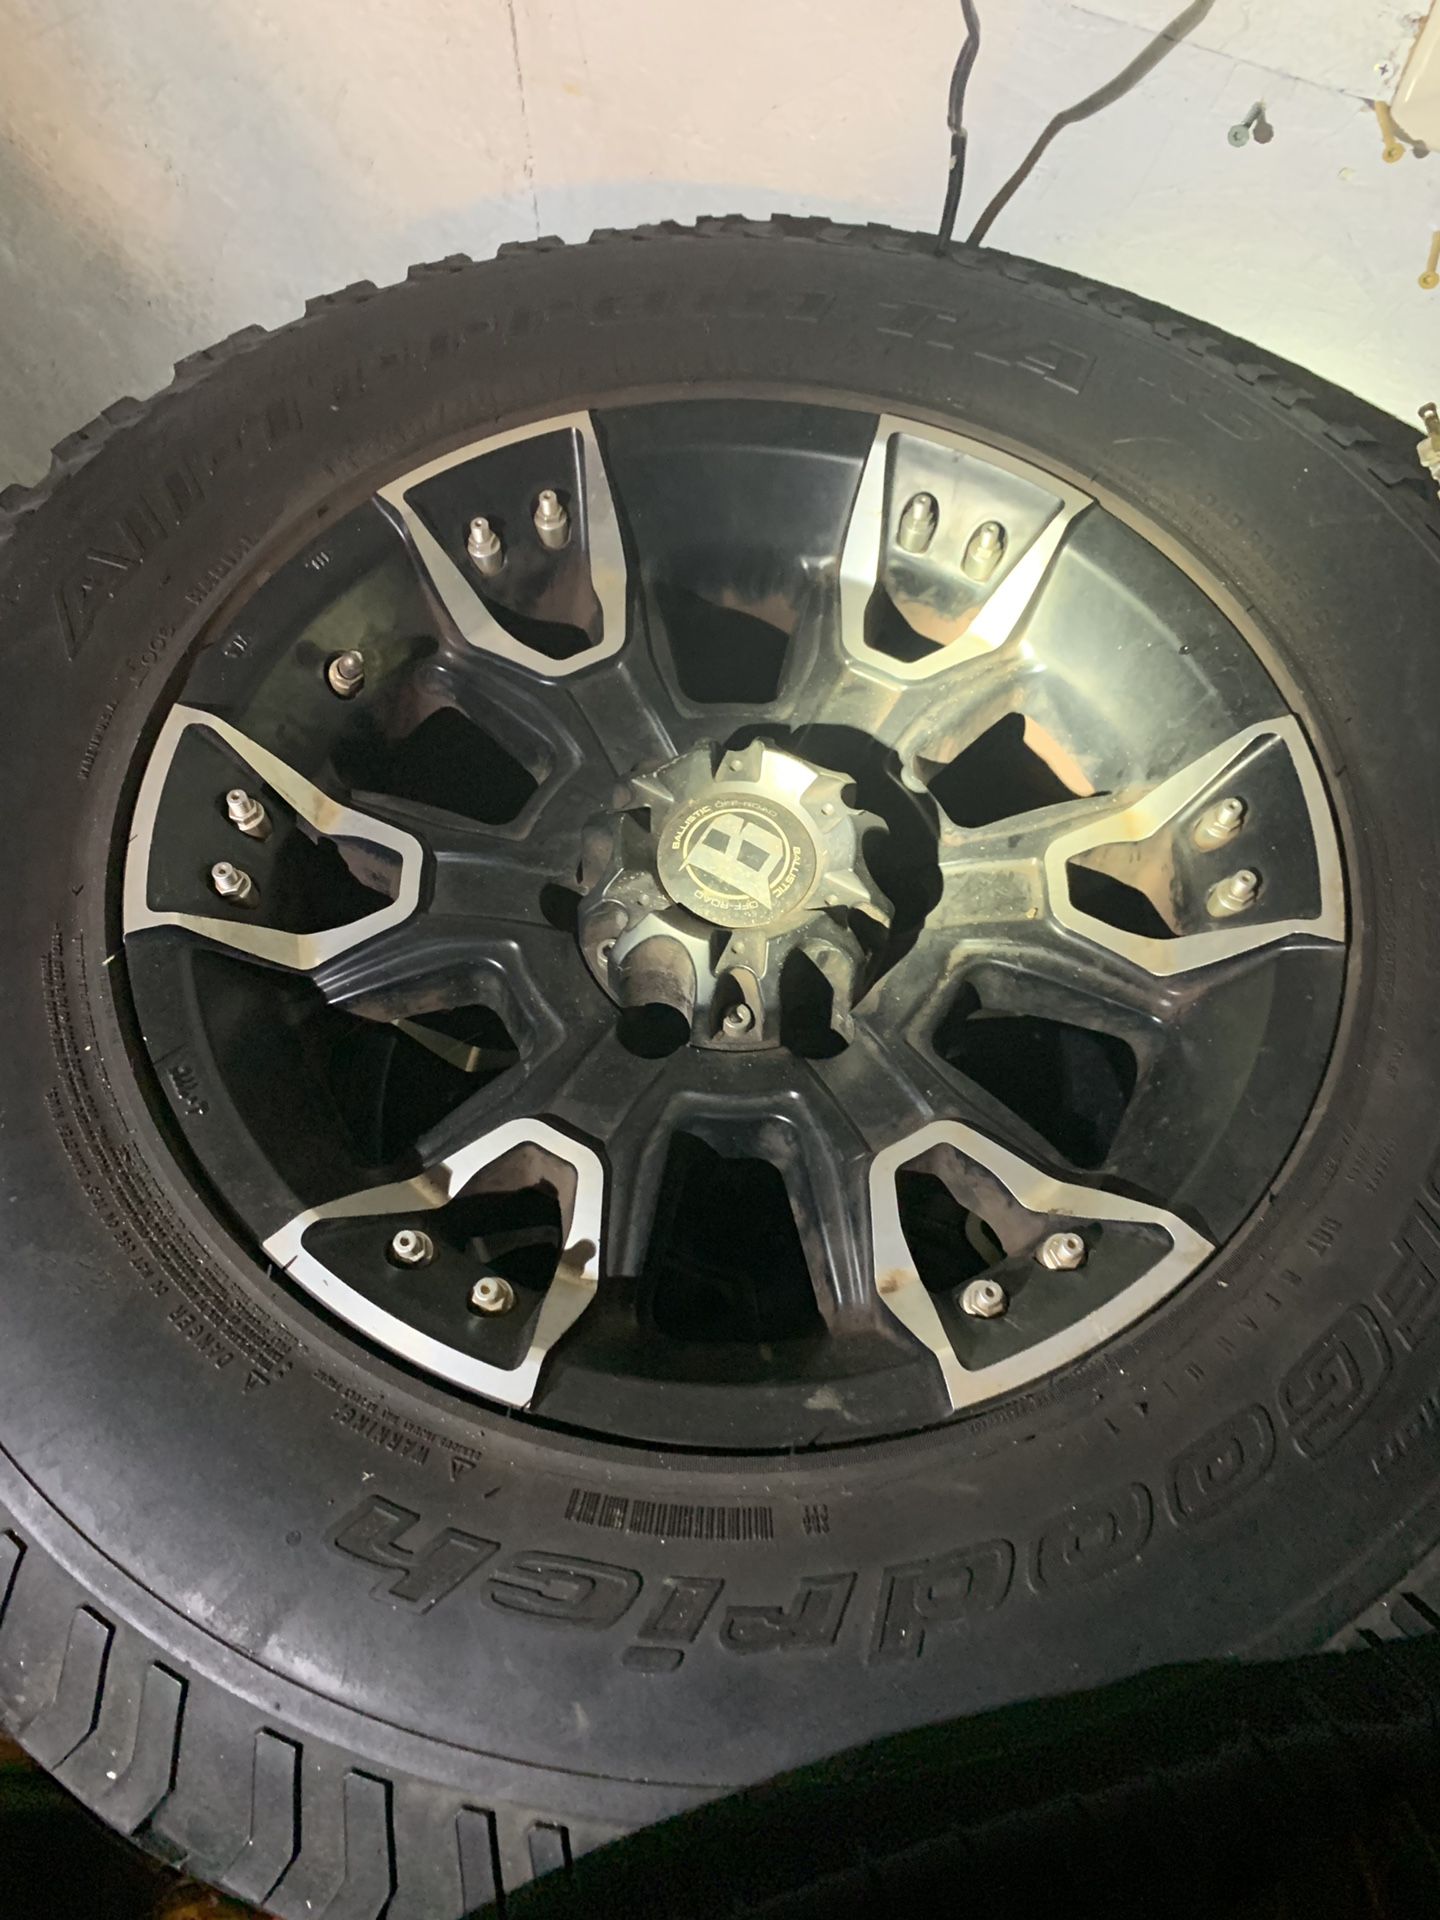 6 lug wheels (LT265 70 r17) GMC Yukon/Tahoe/Sierra wheels and tires